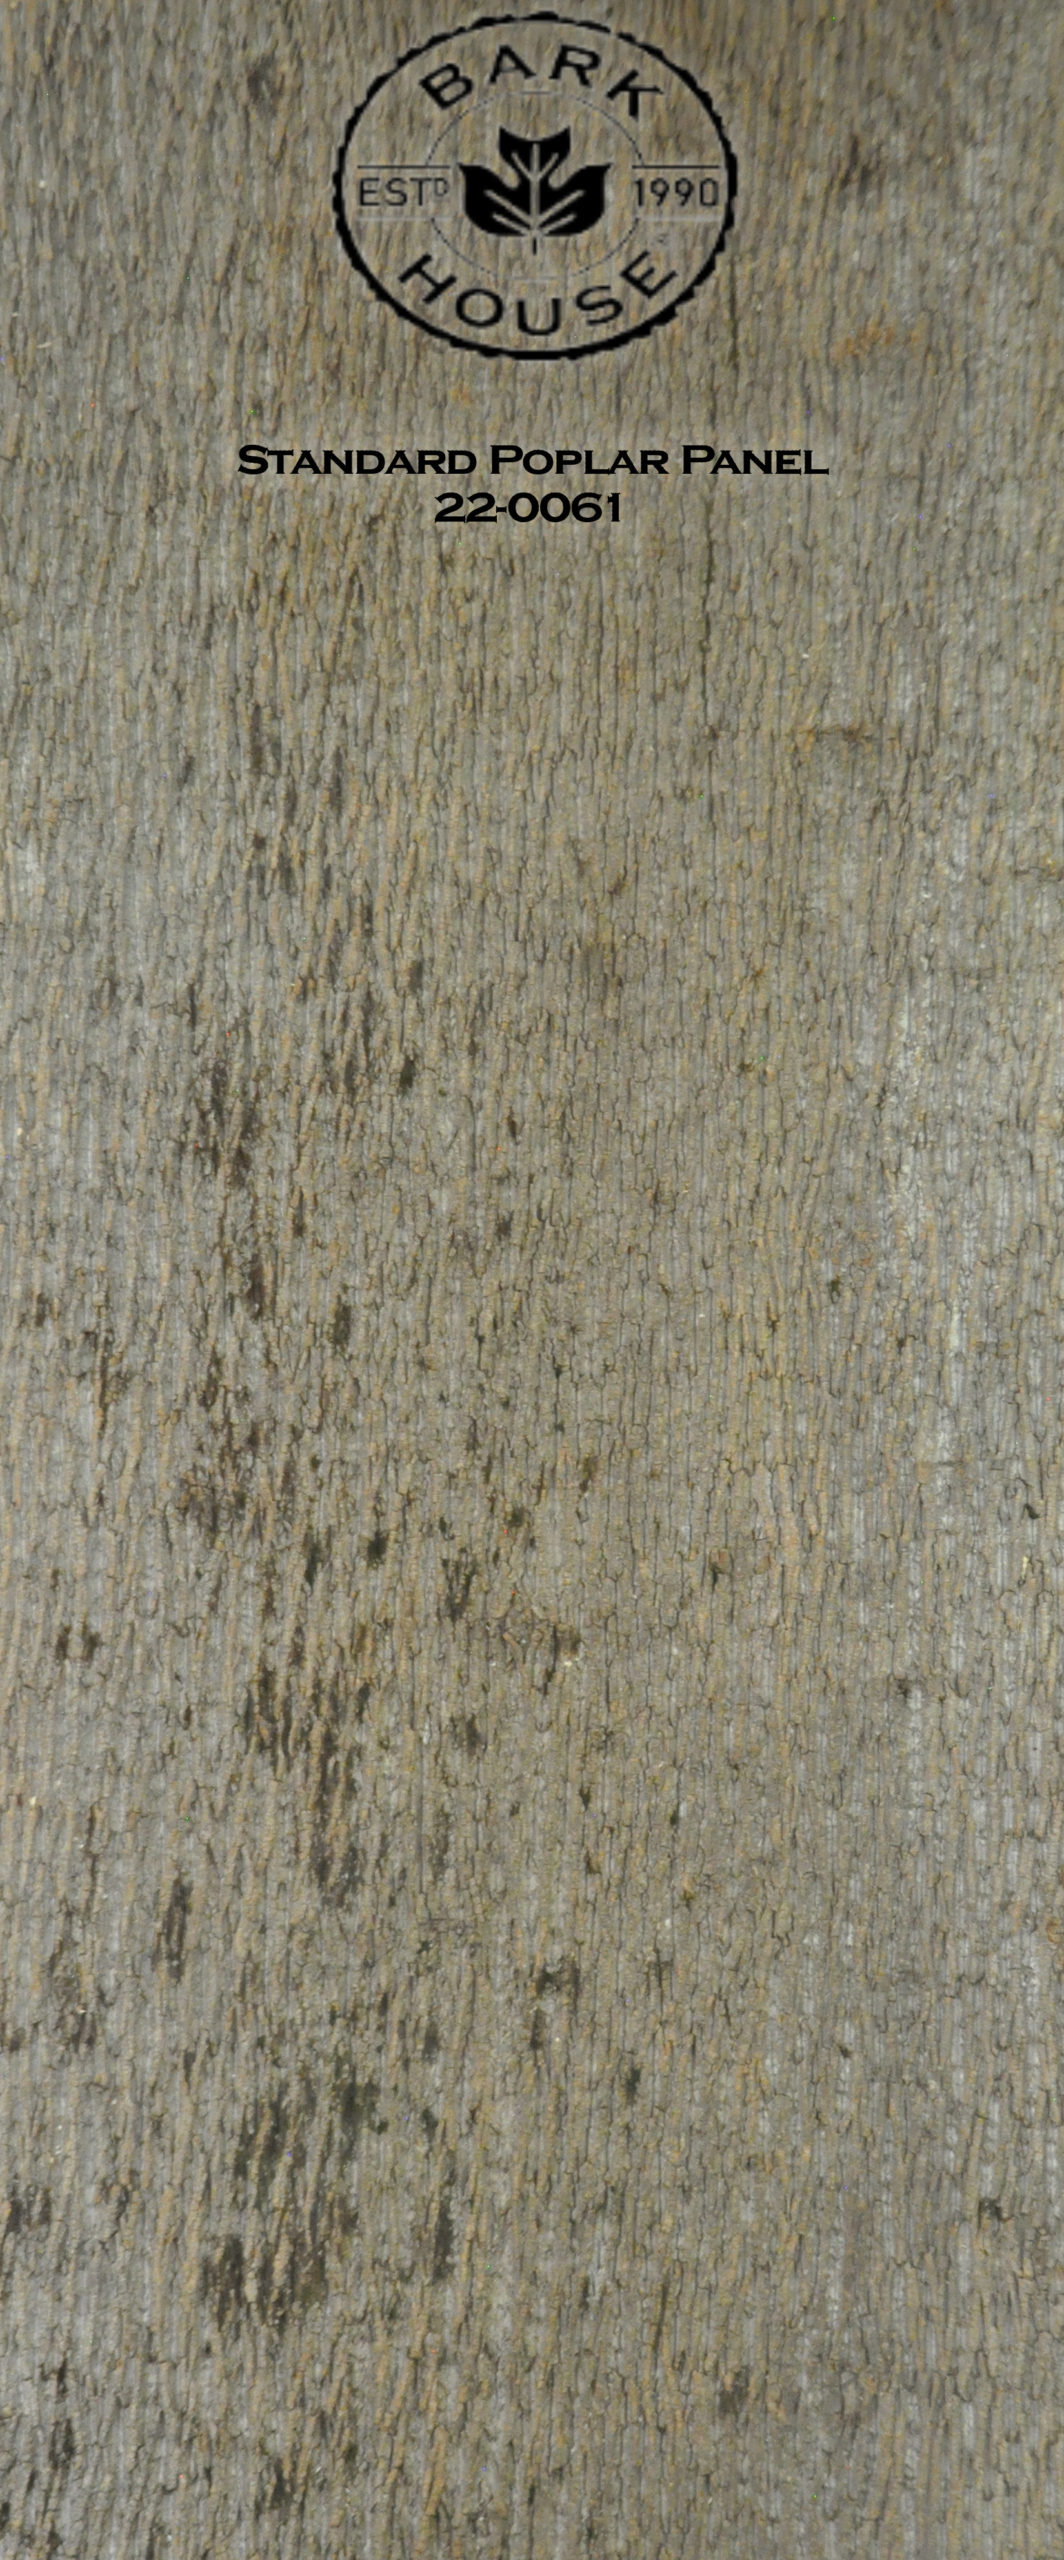 Bark House poplar bark panel SKU POPP-STD-22-0061